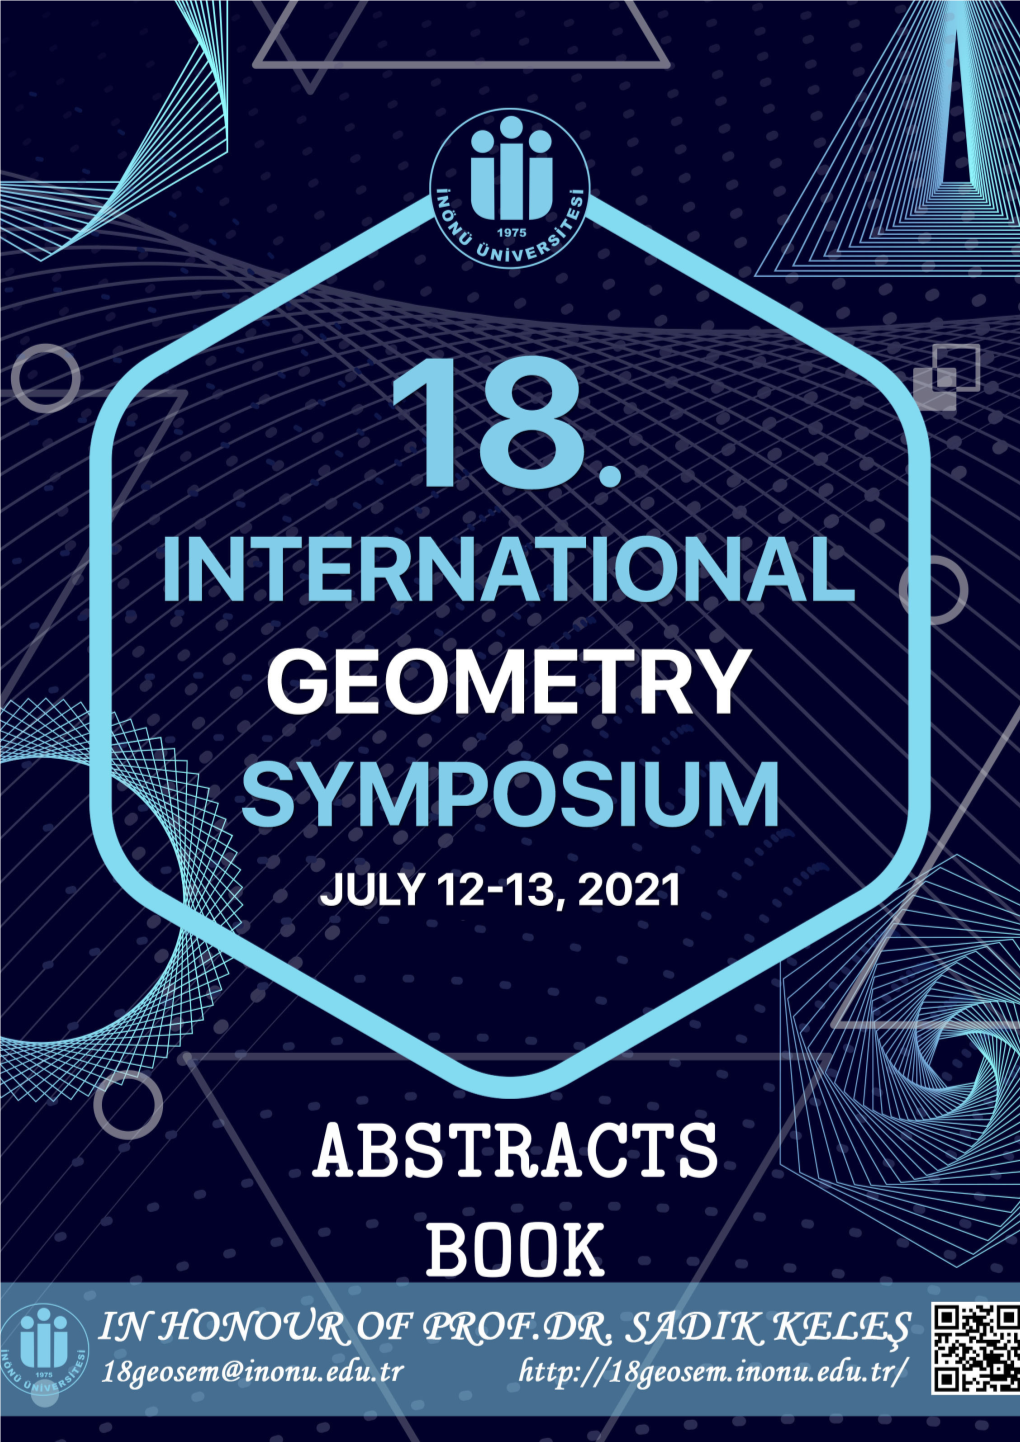 18Th International Geometry Symposium in Honour of Prof.Dr